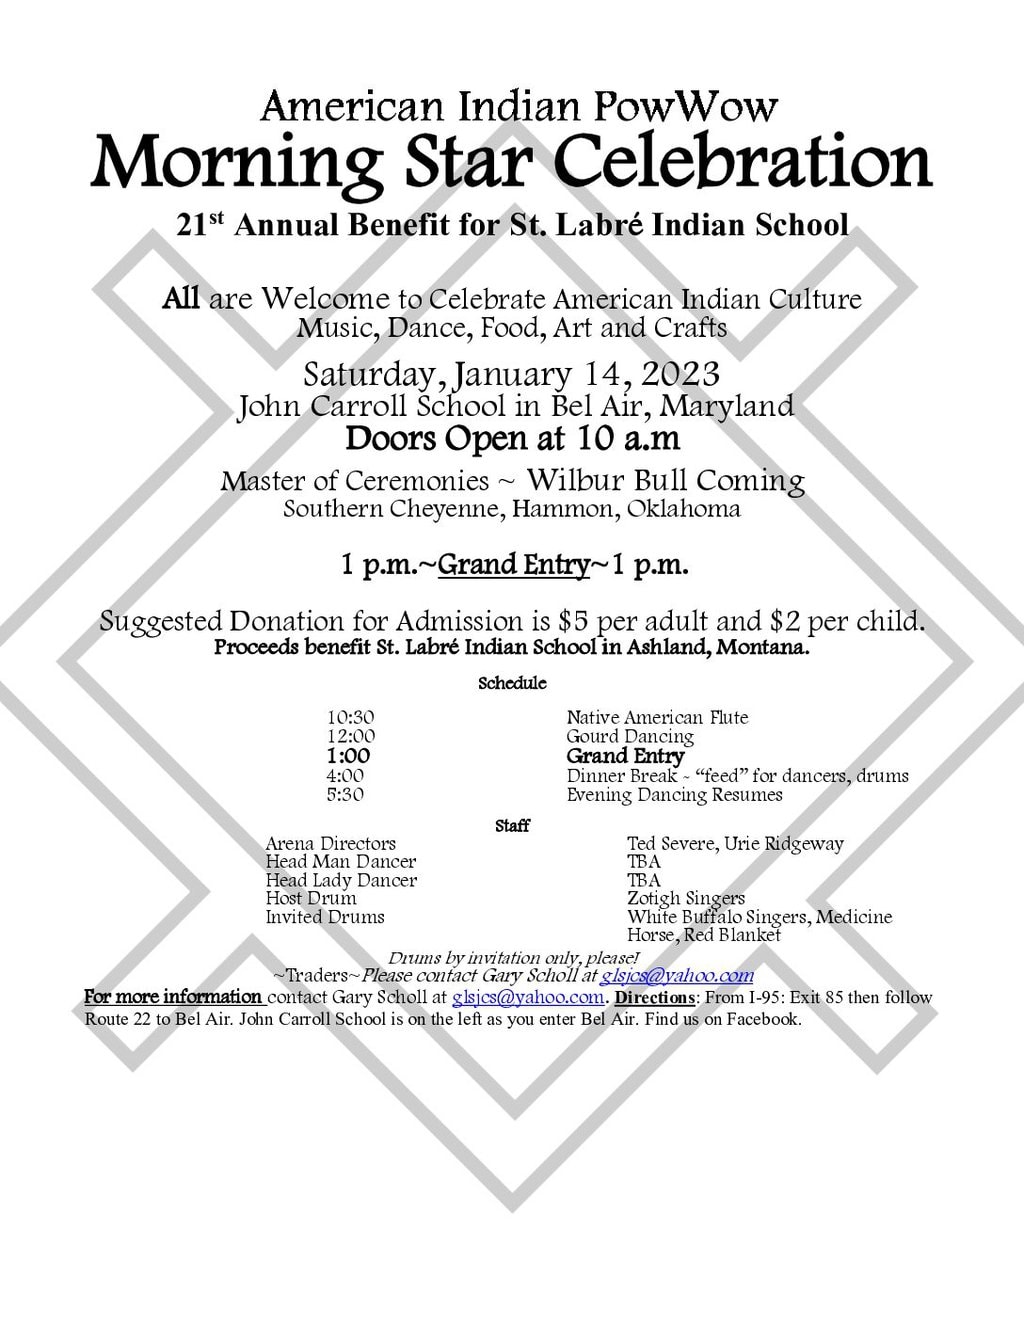 American Indian PowWow Morning Star Celebration 2023